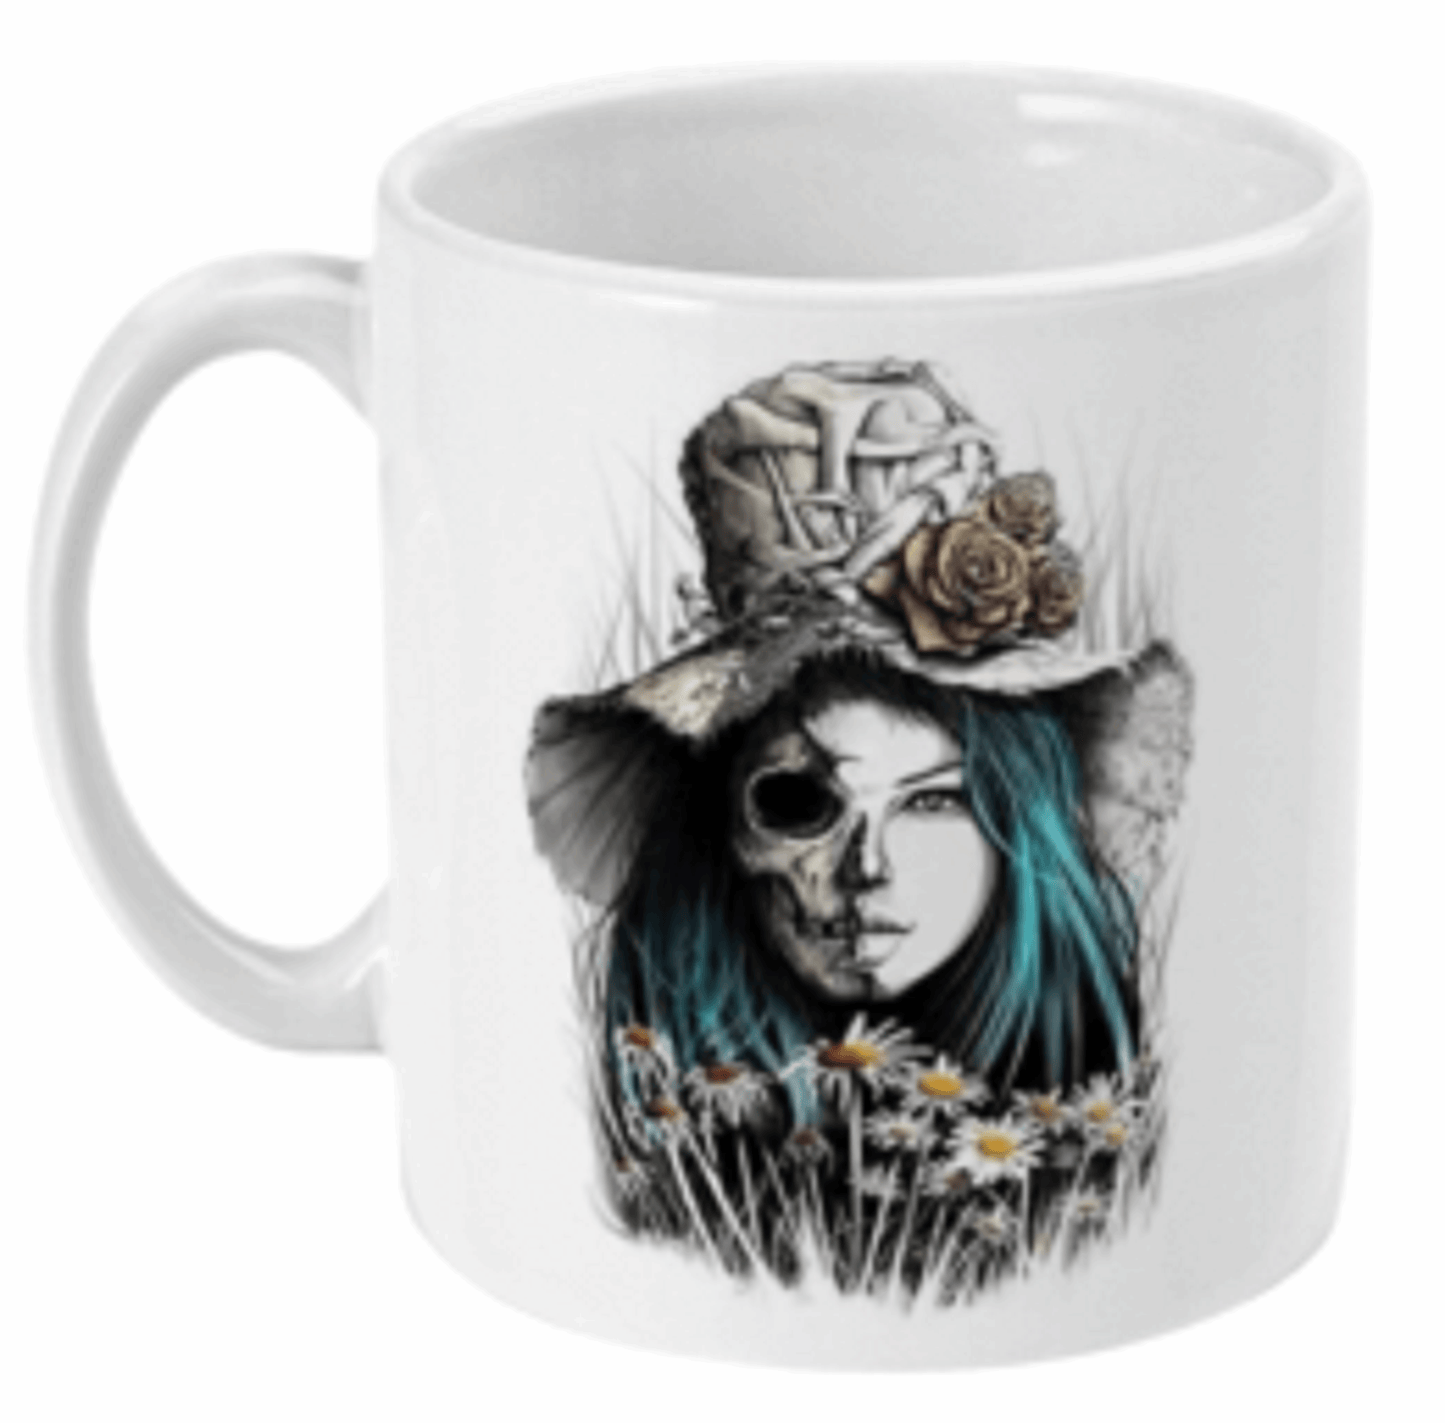  Half Lady Half Skull Coffee Mug by Free Spirit Accessories sold by Free Spirit Accessories